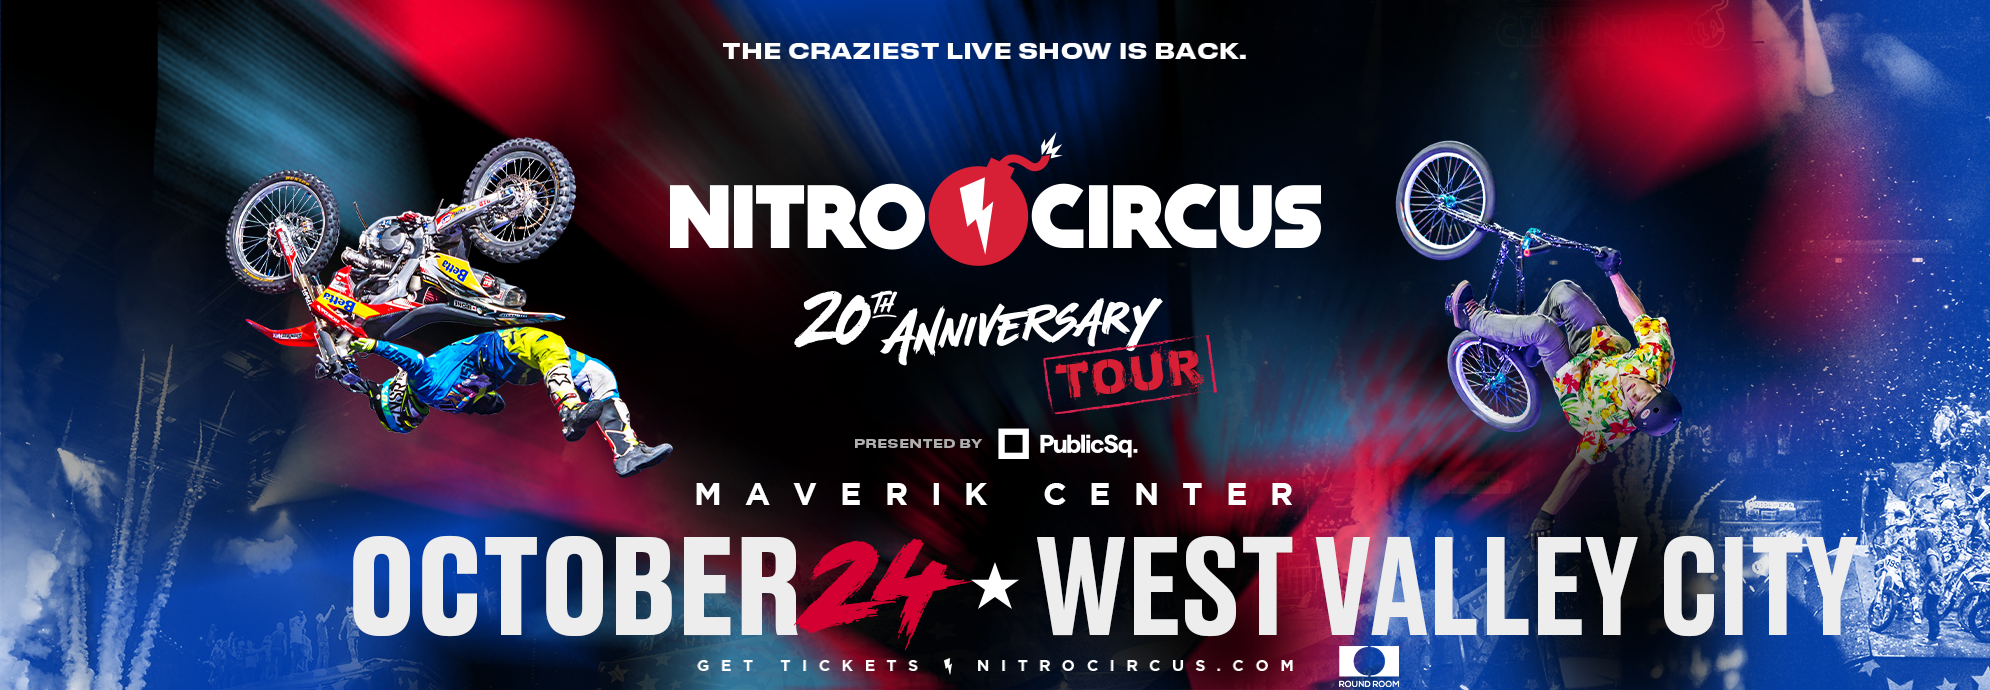 Nitro Circus 20th Anniversary Tour